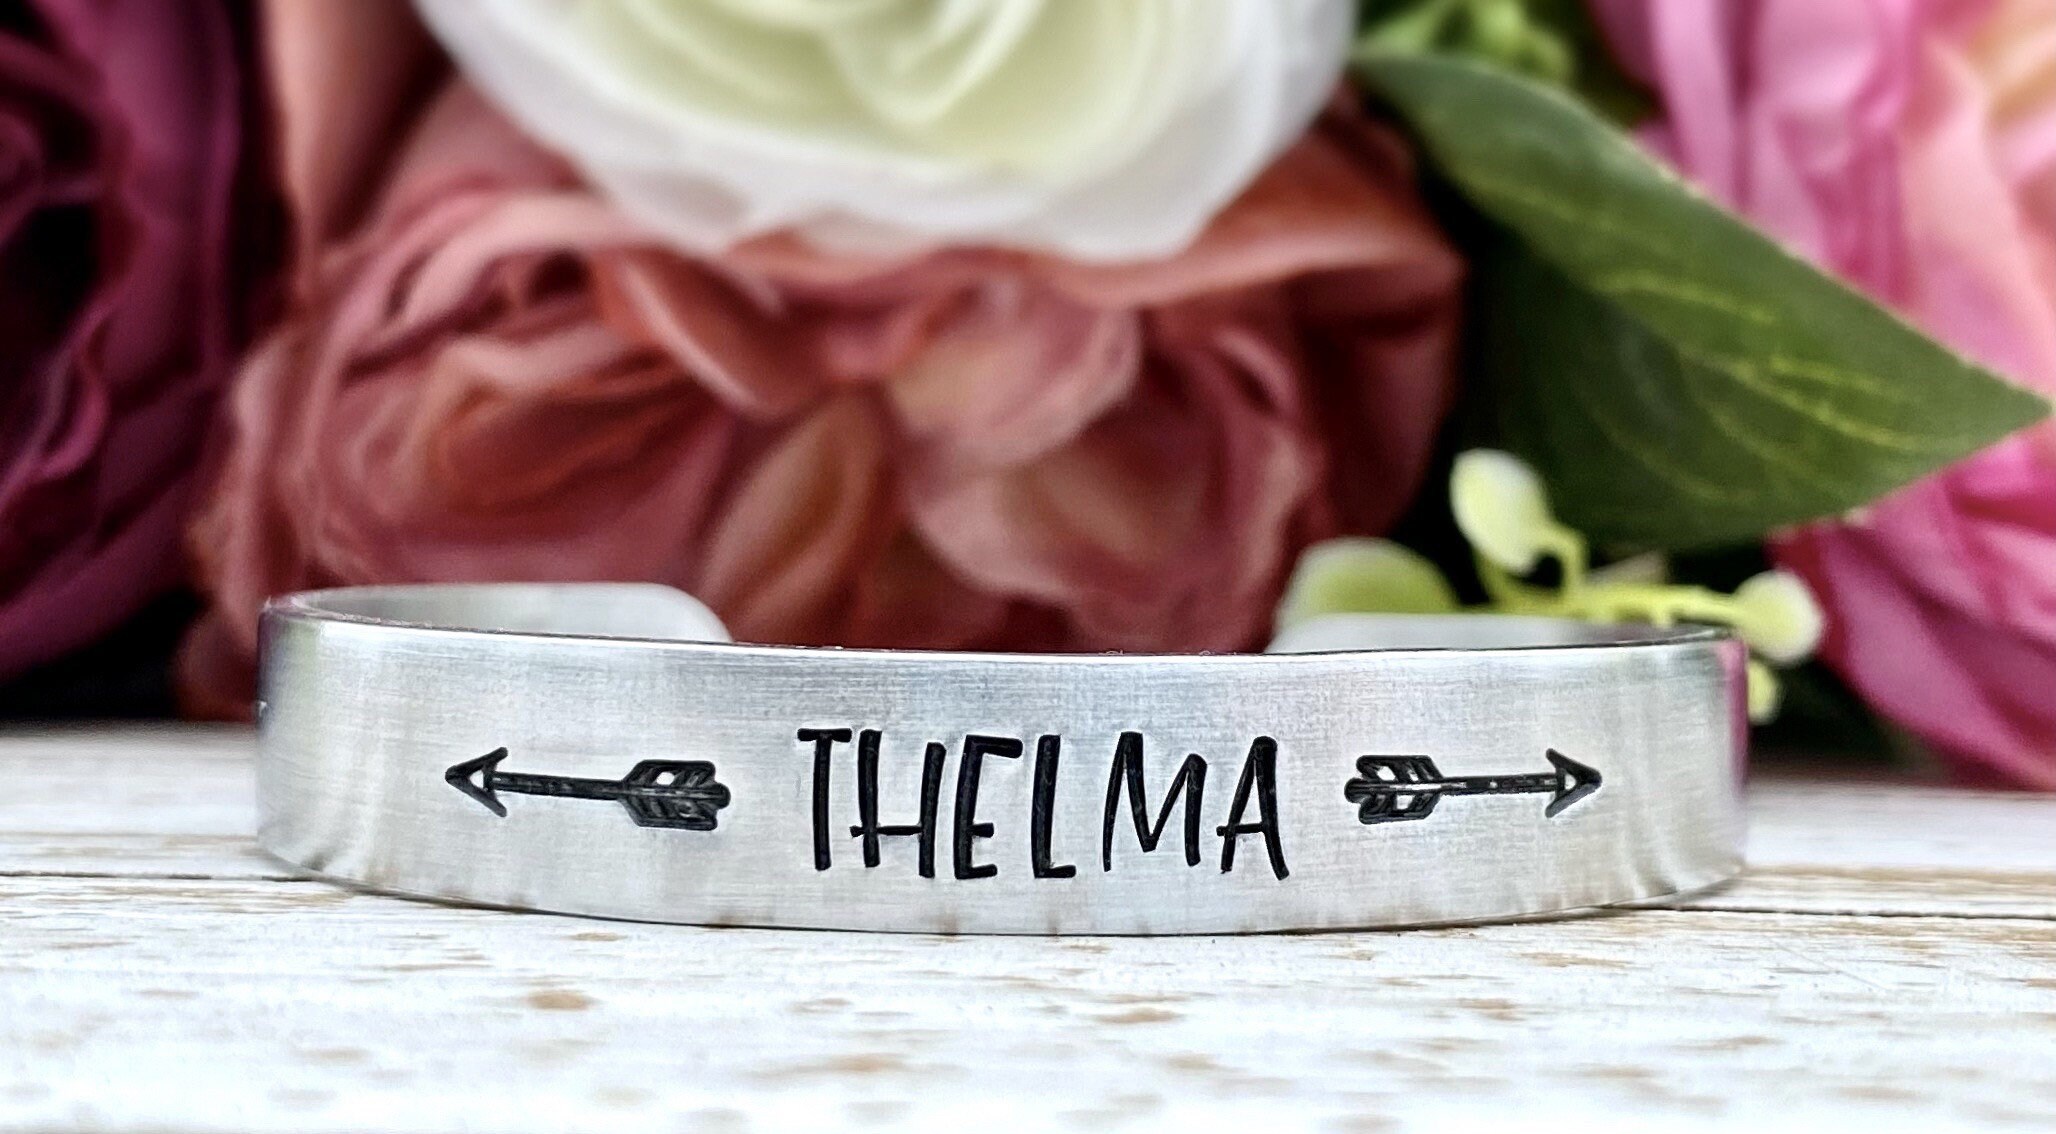 Thelma & Louise Bracelets | Best Friends Sisters | Hand Stamped | Stackable Bracelet | Adjustable Bracelet | Gift 